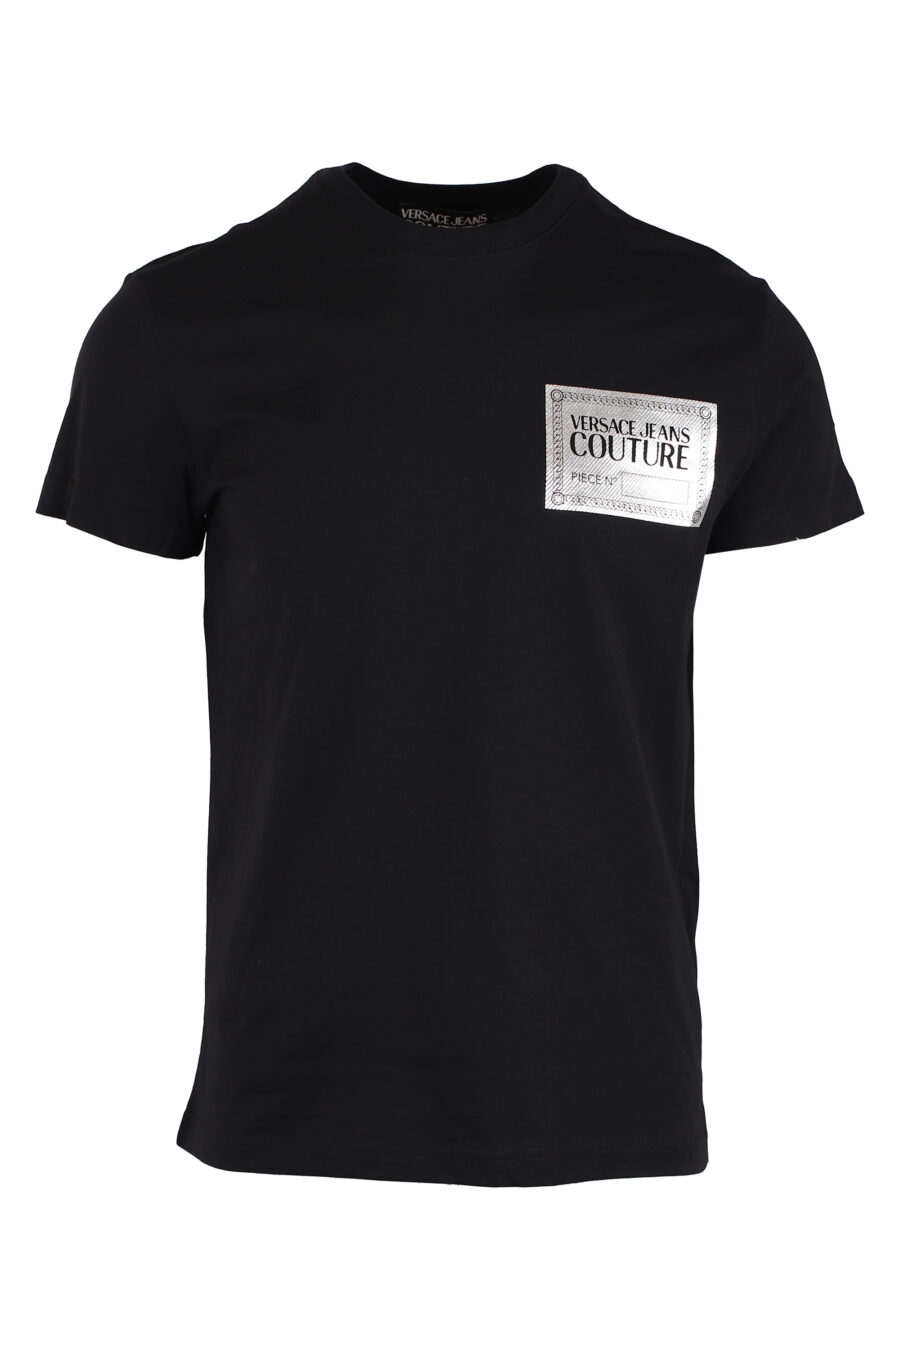 Camiseta negra con logo sello en plateado - IMG 4150